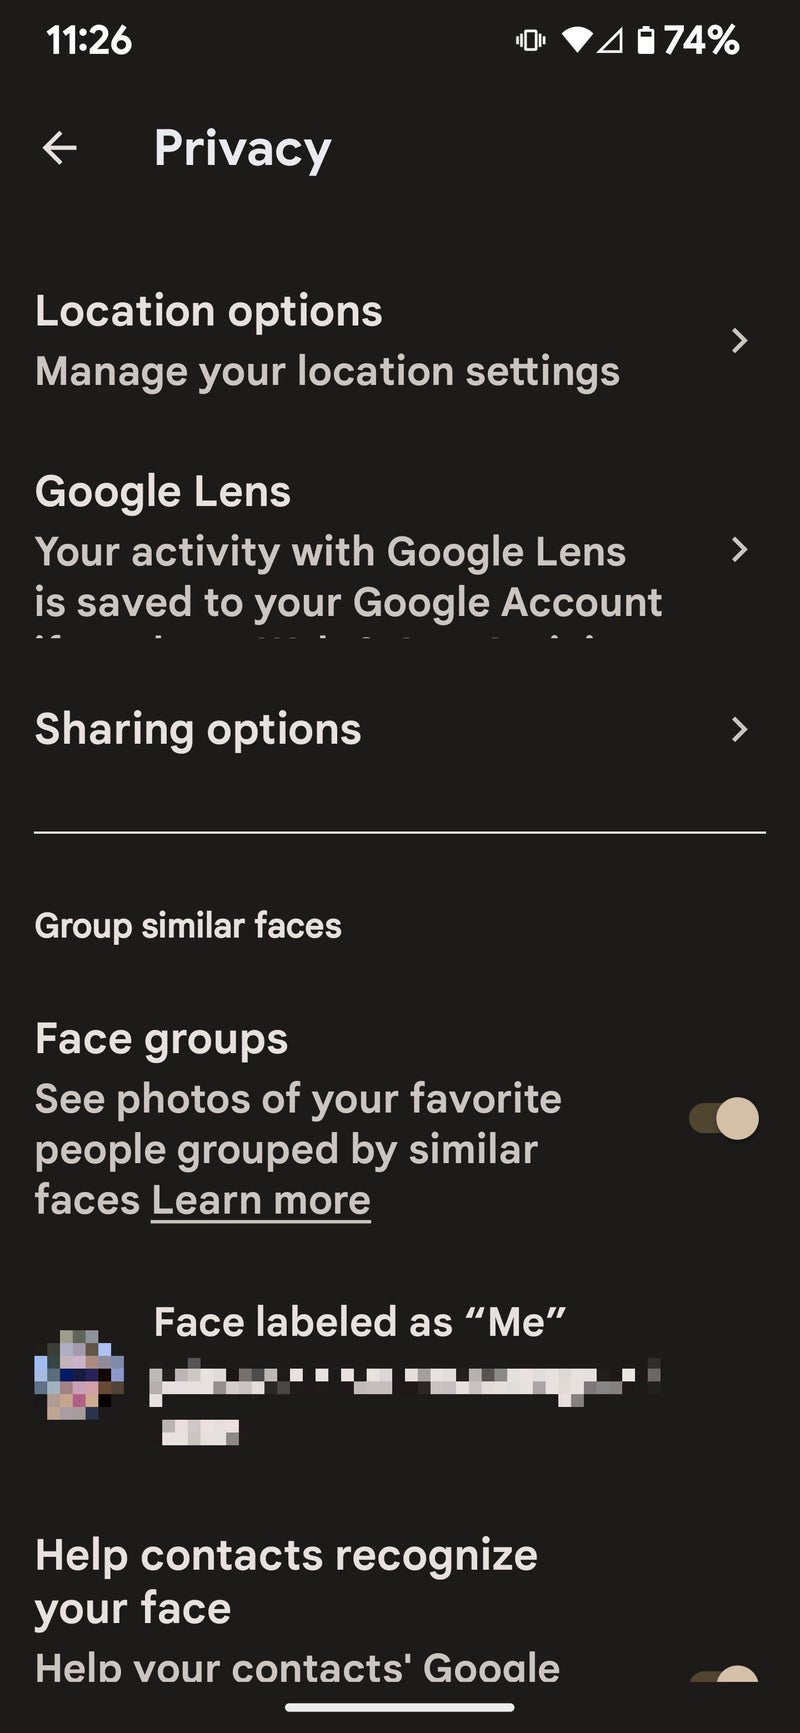 New Google Photos Settings and Sub-Menus